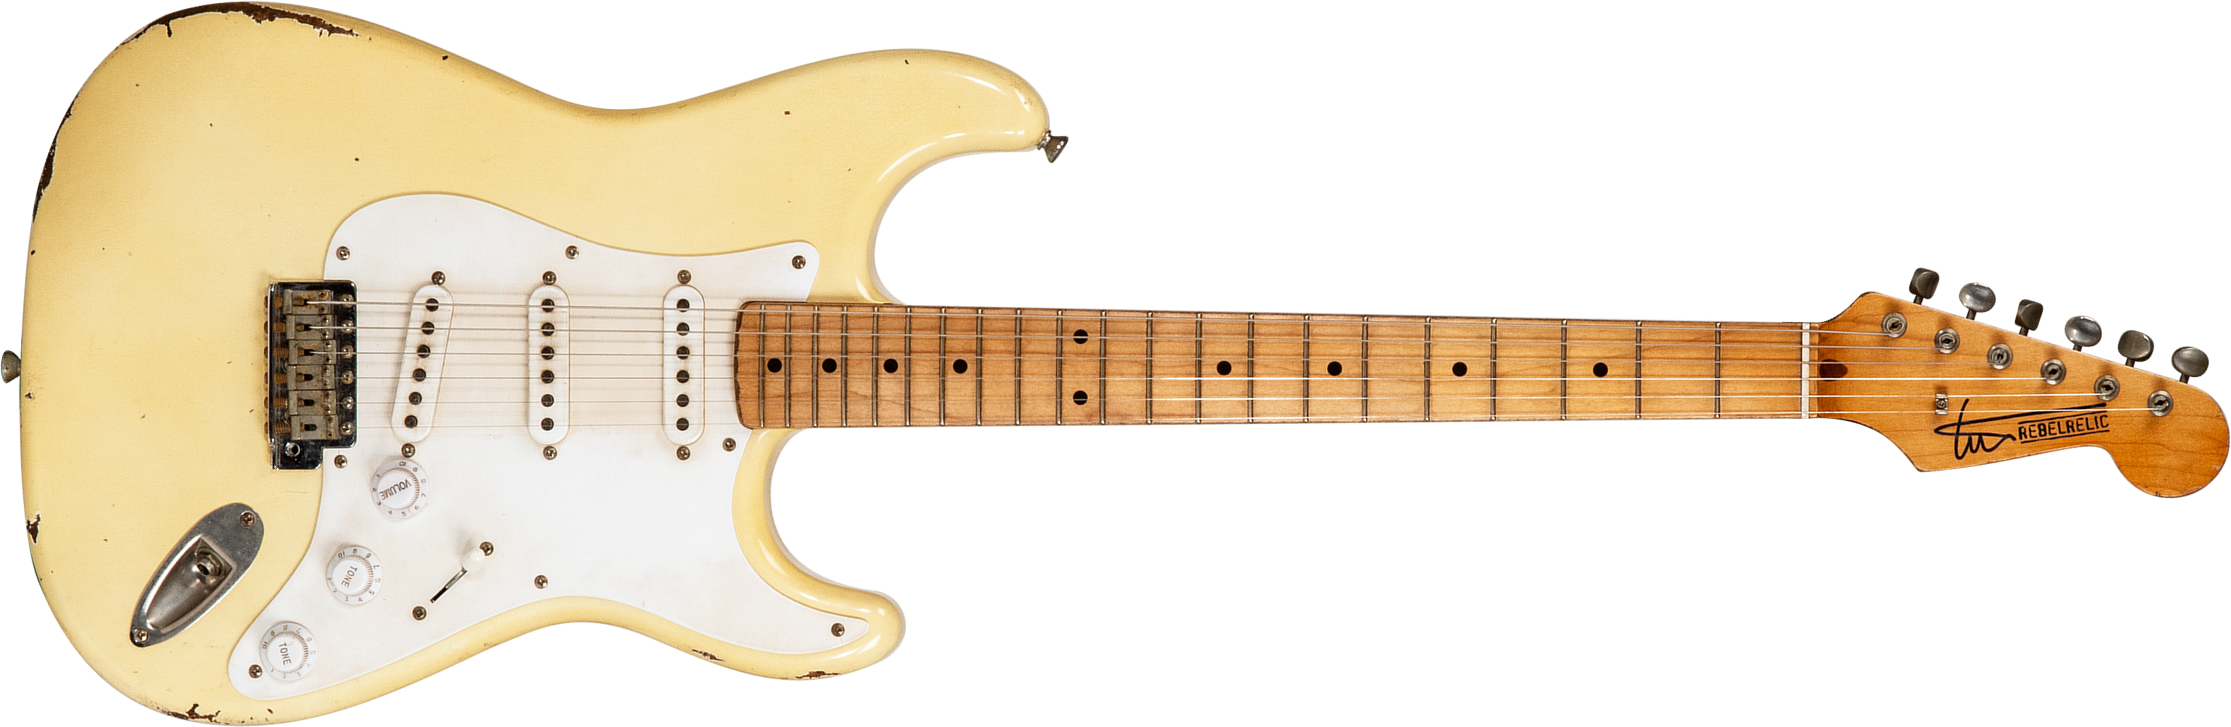 Rebelrelic S-series 55 3s Trem Mn #62191 - Light Aged Banana - Guitarra eléctrica con forma de str. - Main picture